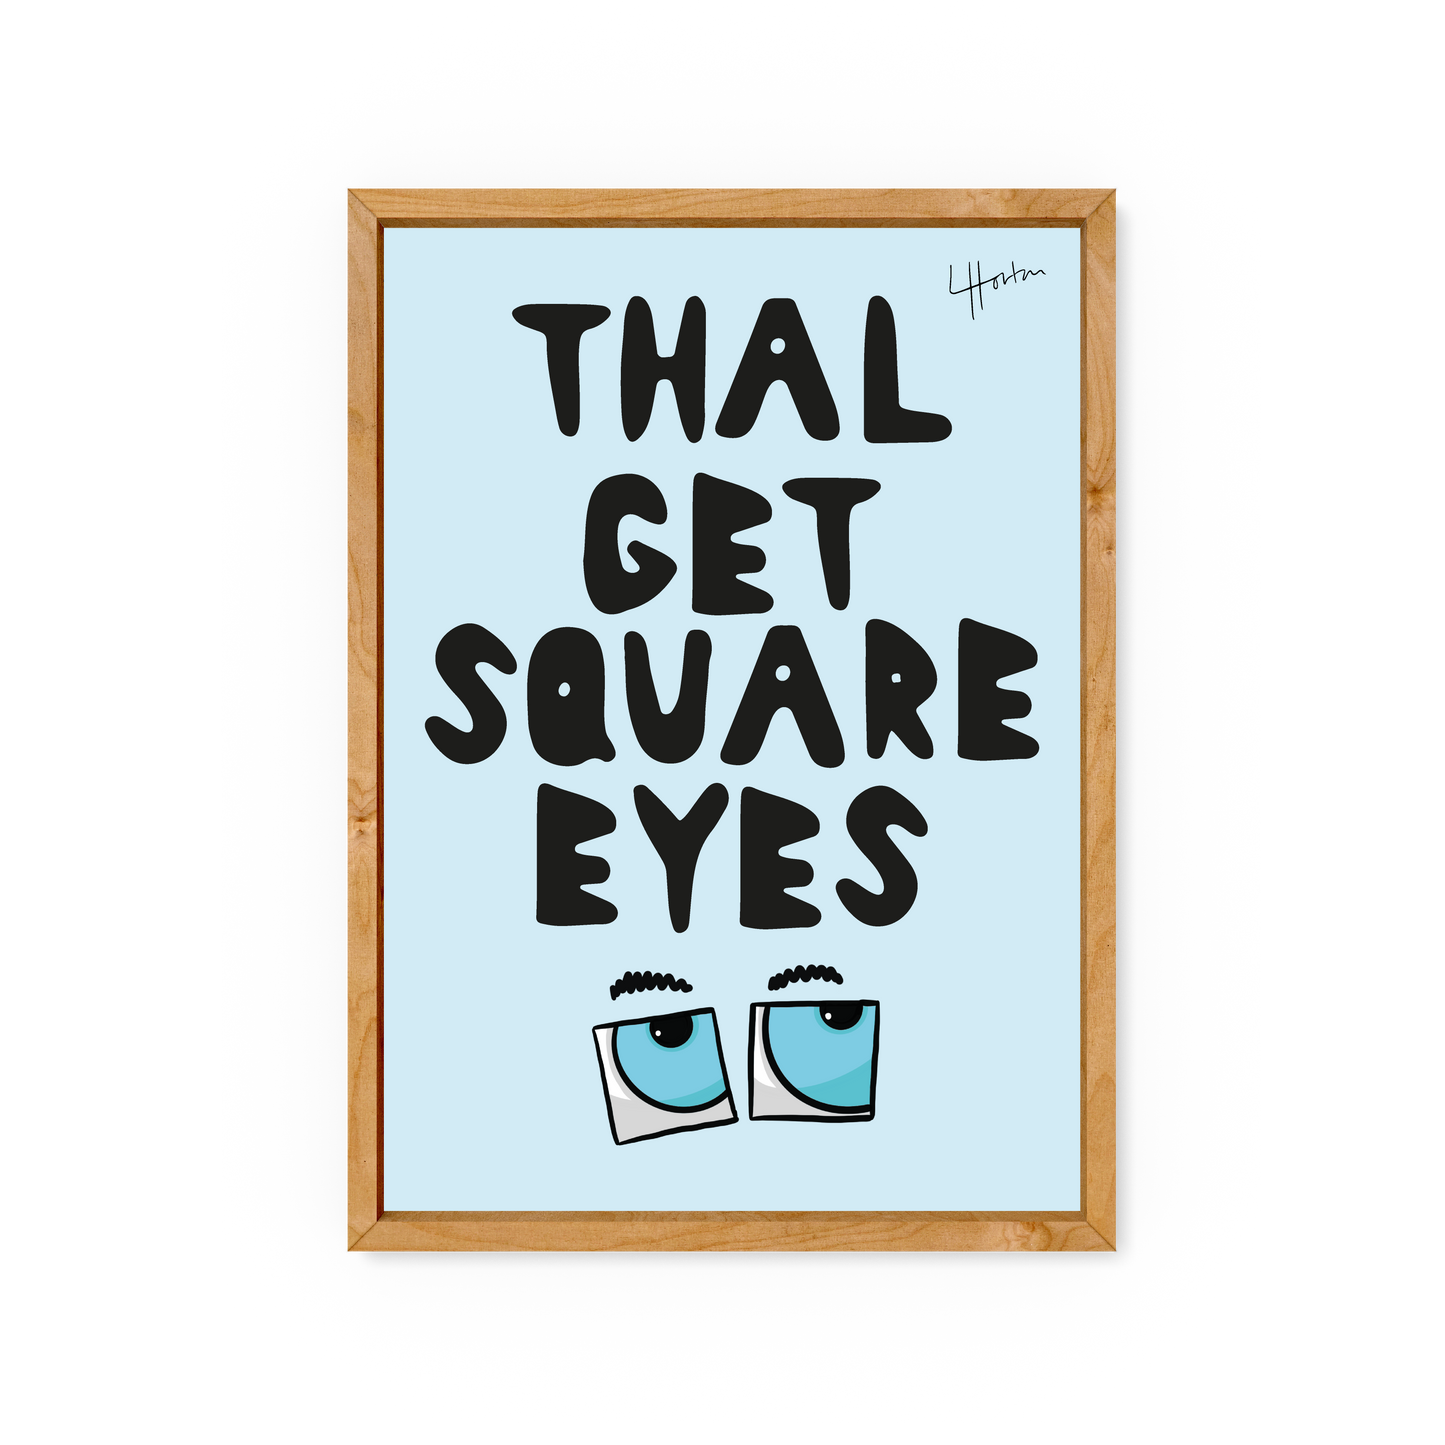 Thal Get Square Eyes - Yorkshire Art Print - Luke Horton